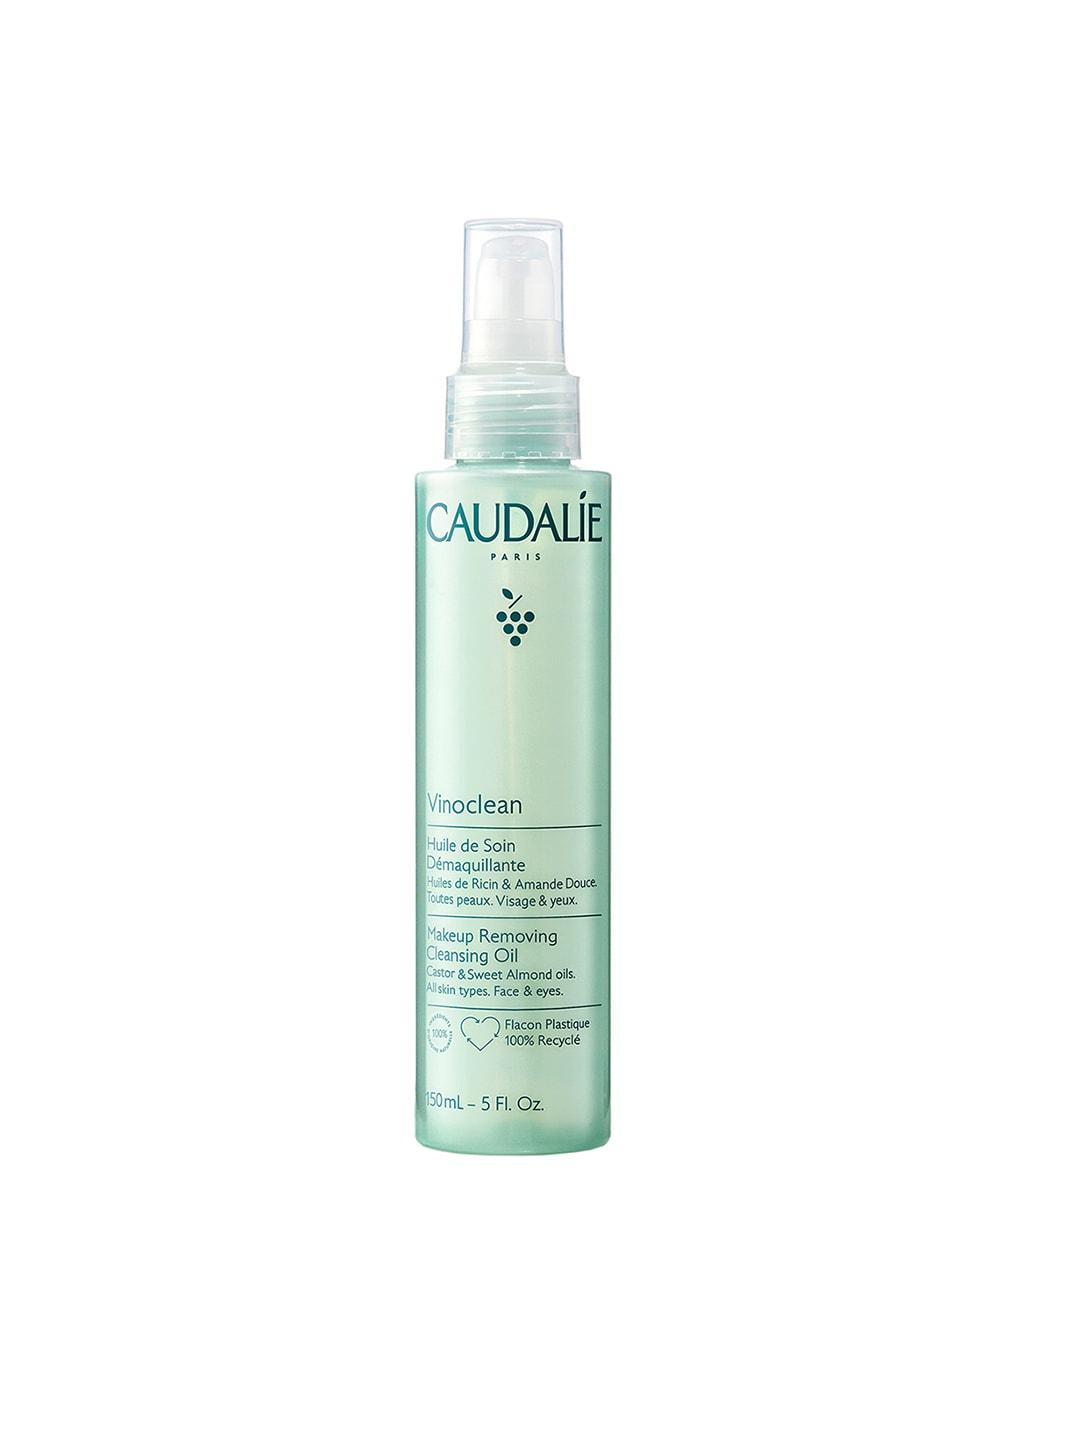 caudalie vinoclean makeup removing cleansing oil with castor & almond oil - vegan - 150 ml